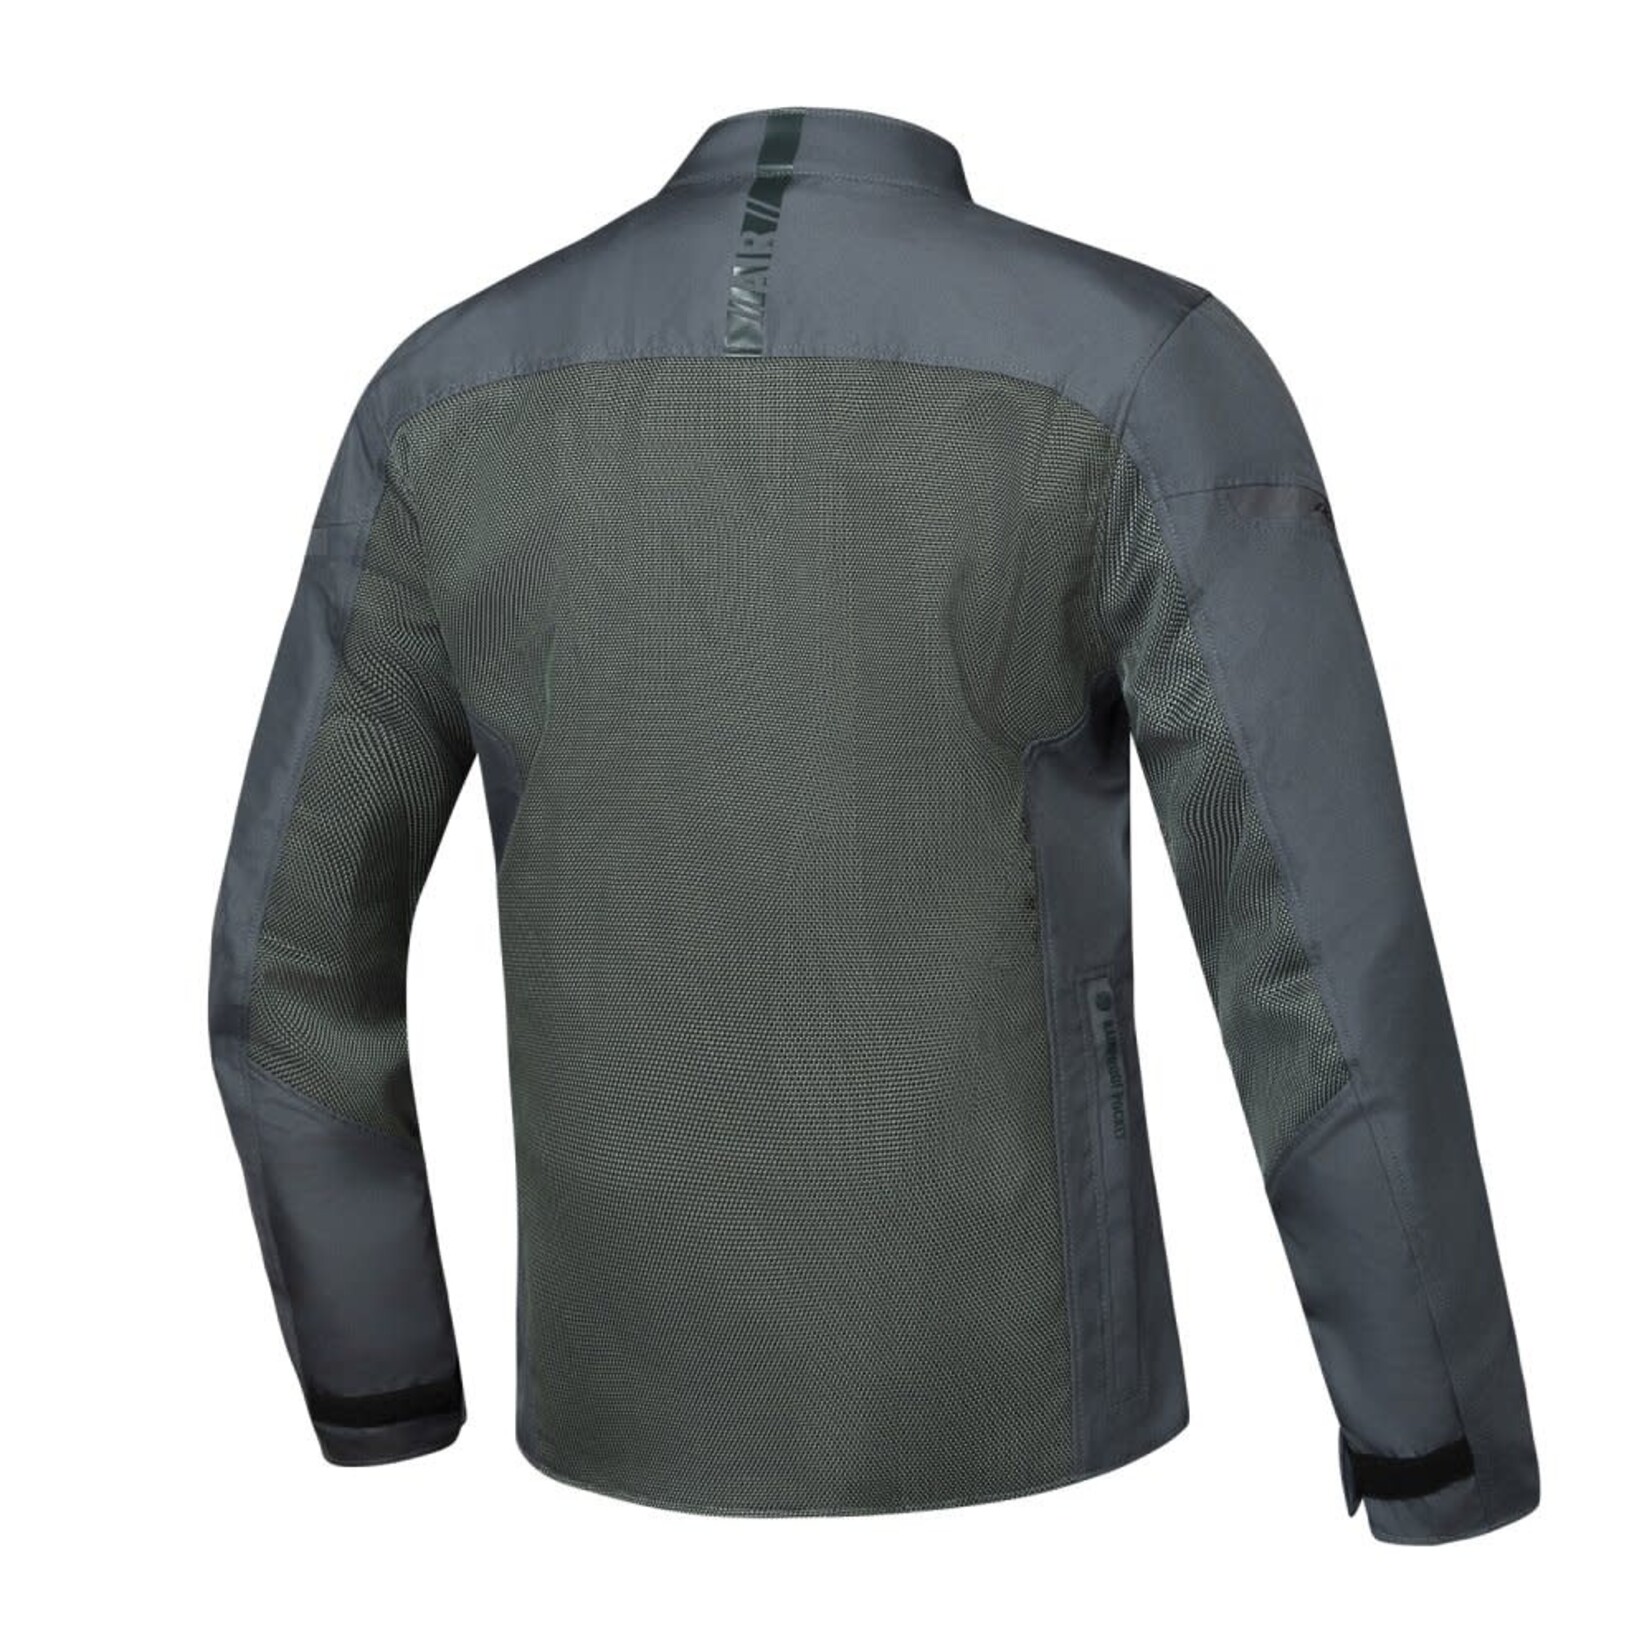 Ixon Ixon jacket textile fresh slim khaki